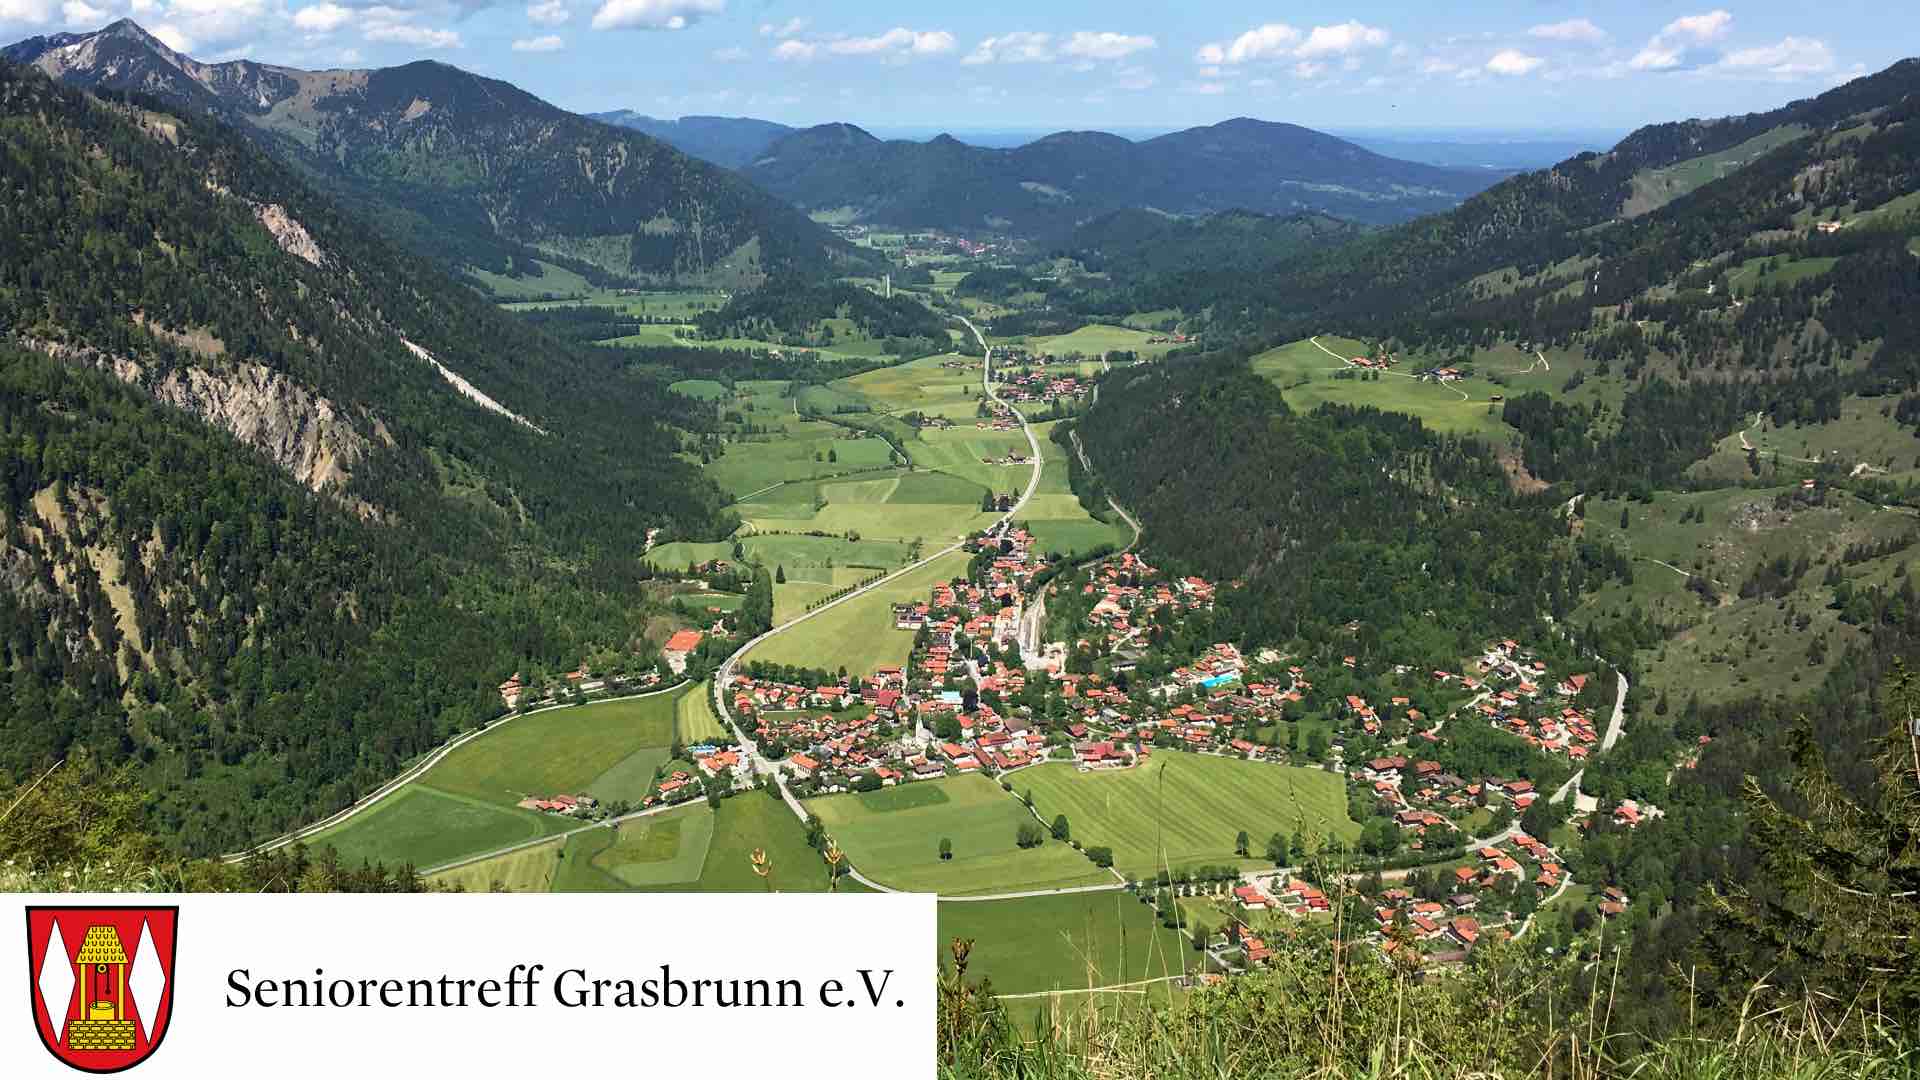 Ausflug nach Bayrischzell mit dem Seniorentreff Grasbrunn e.V.